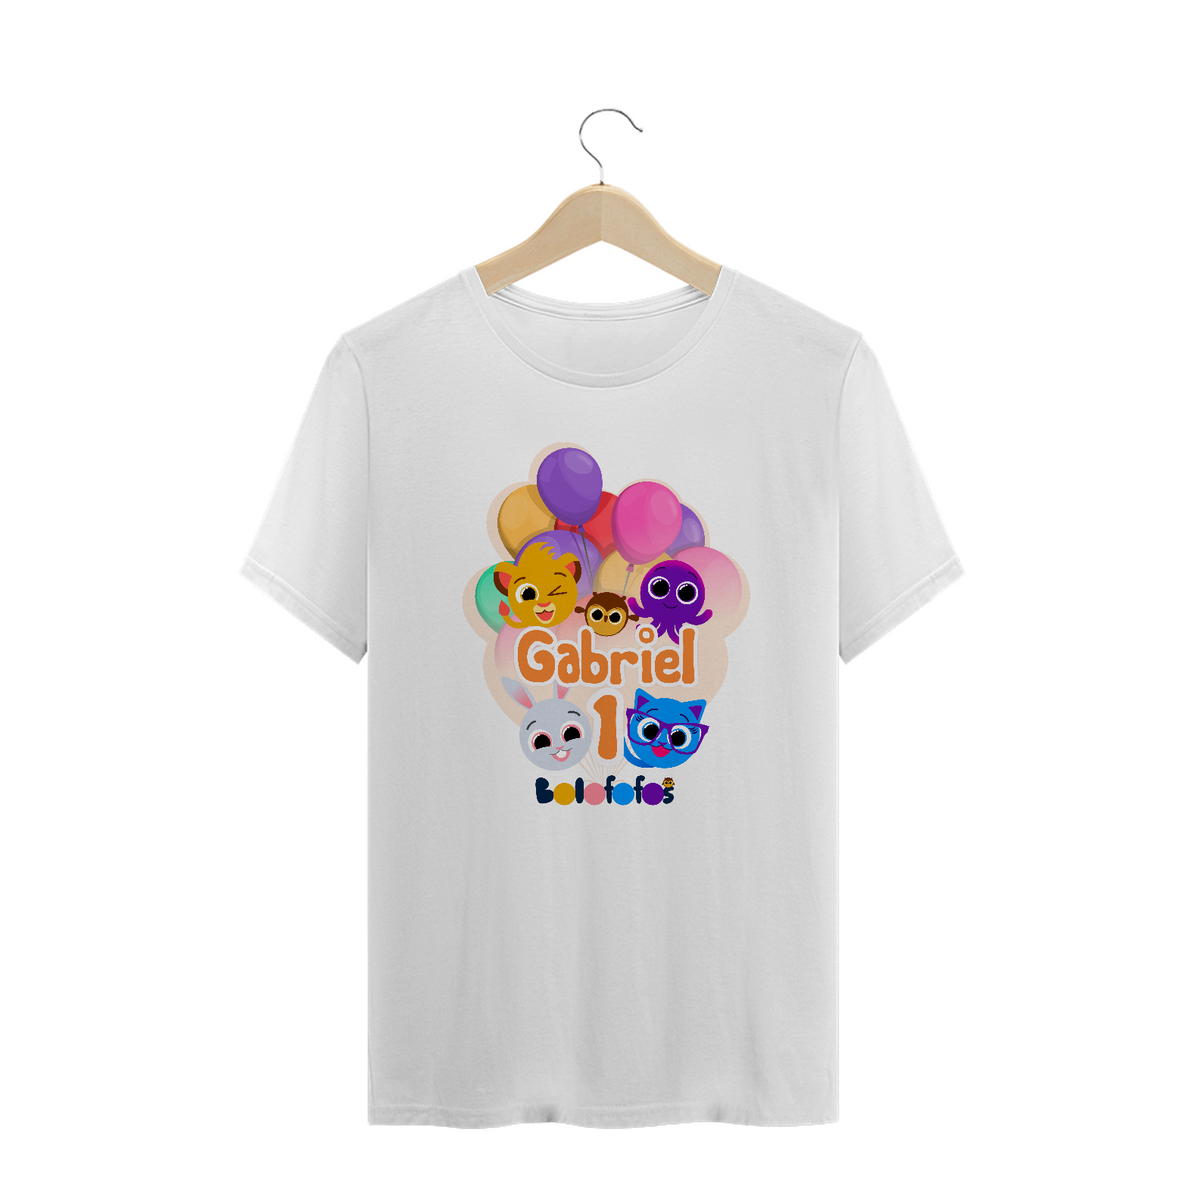 Nome do produto: Camiseta plus size aniversário 1 ano Gabriel